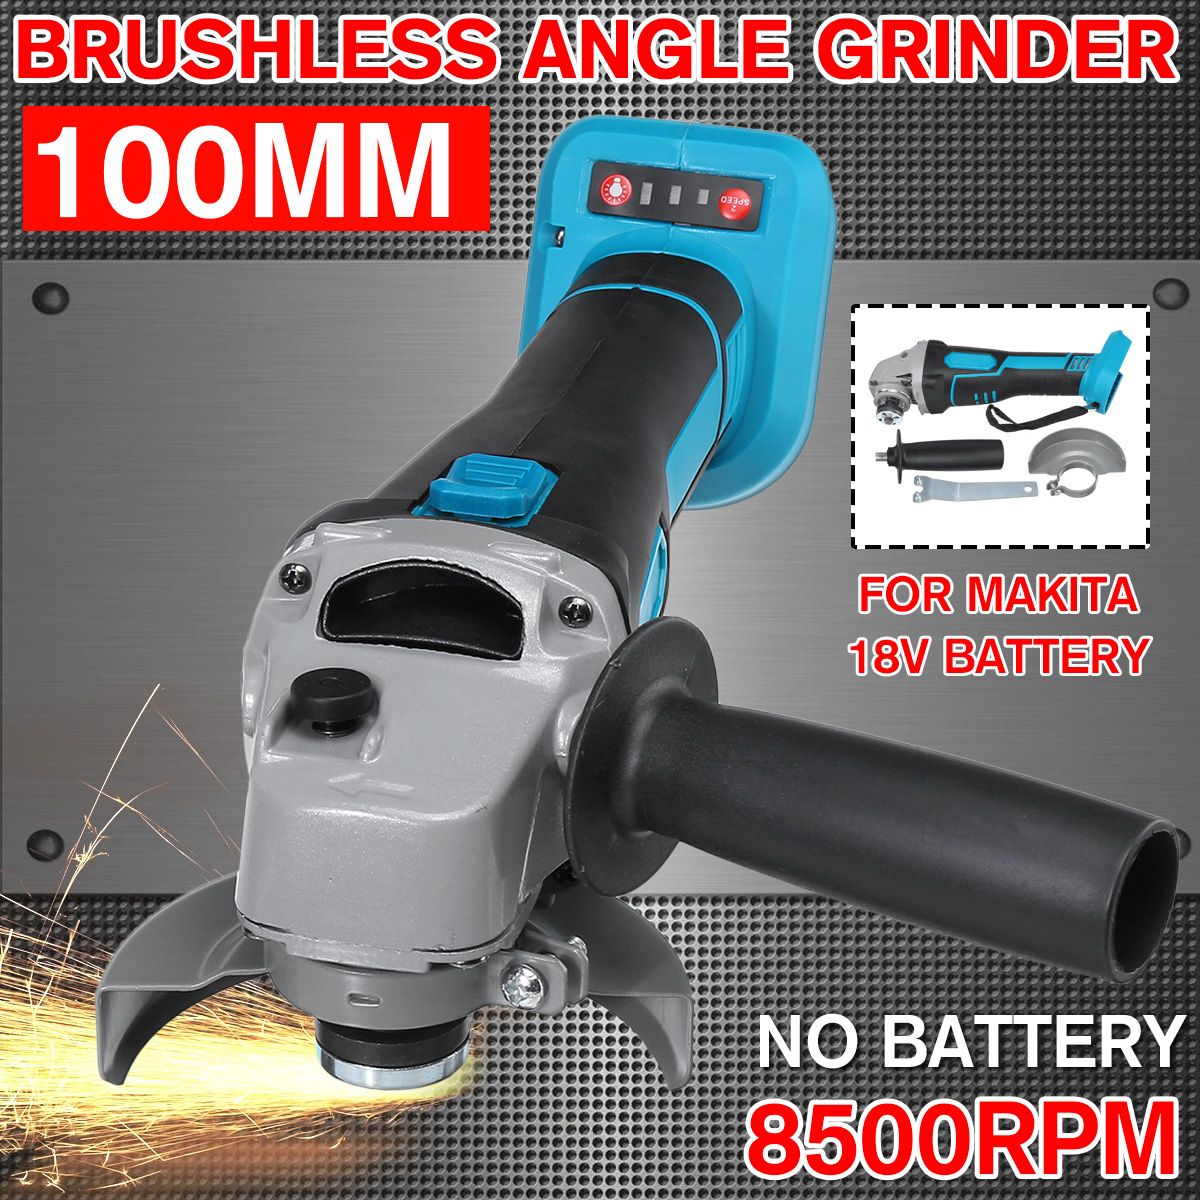 0-8500RPM-Cordless-Brushless-Angle-Grinder-100mm-Body-With-LED-Light-For-18V-Makita-Battery-1636660